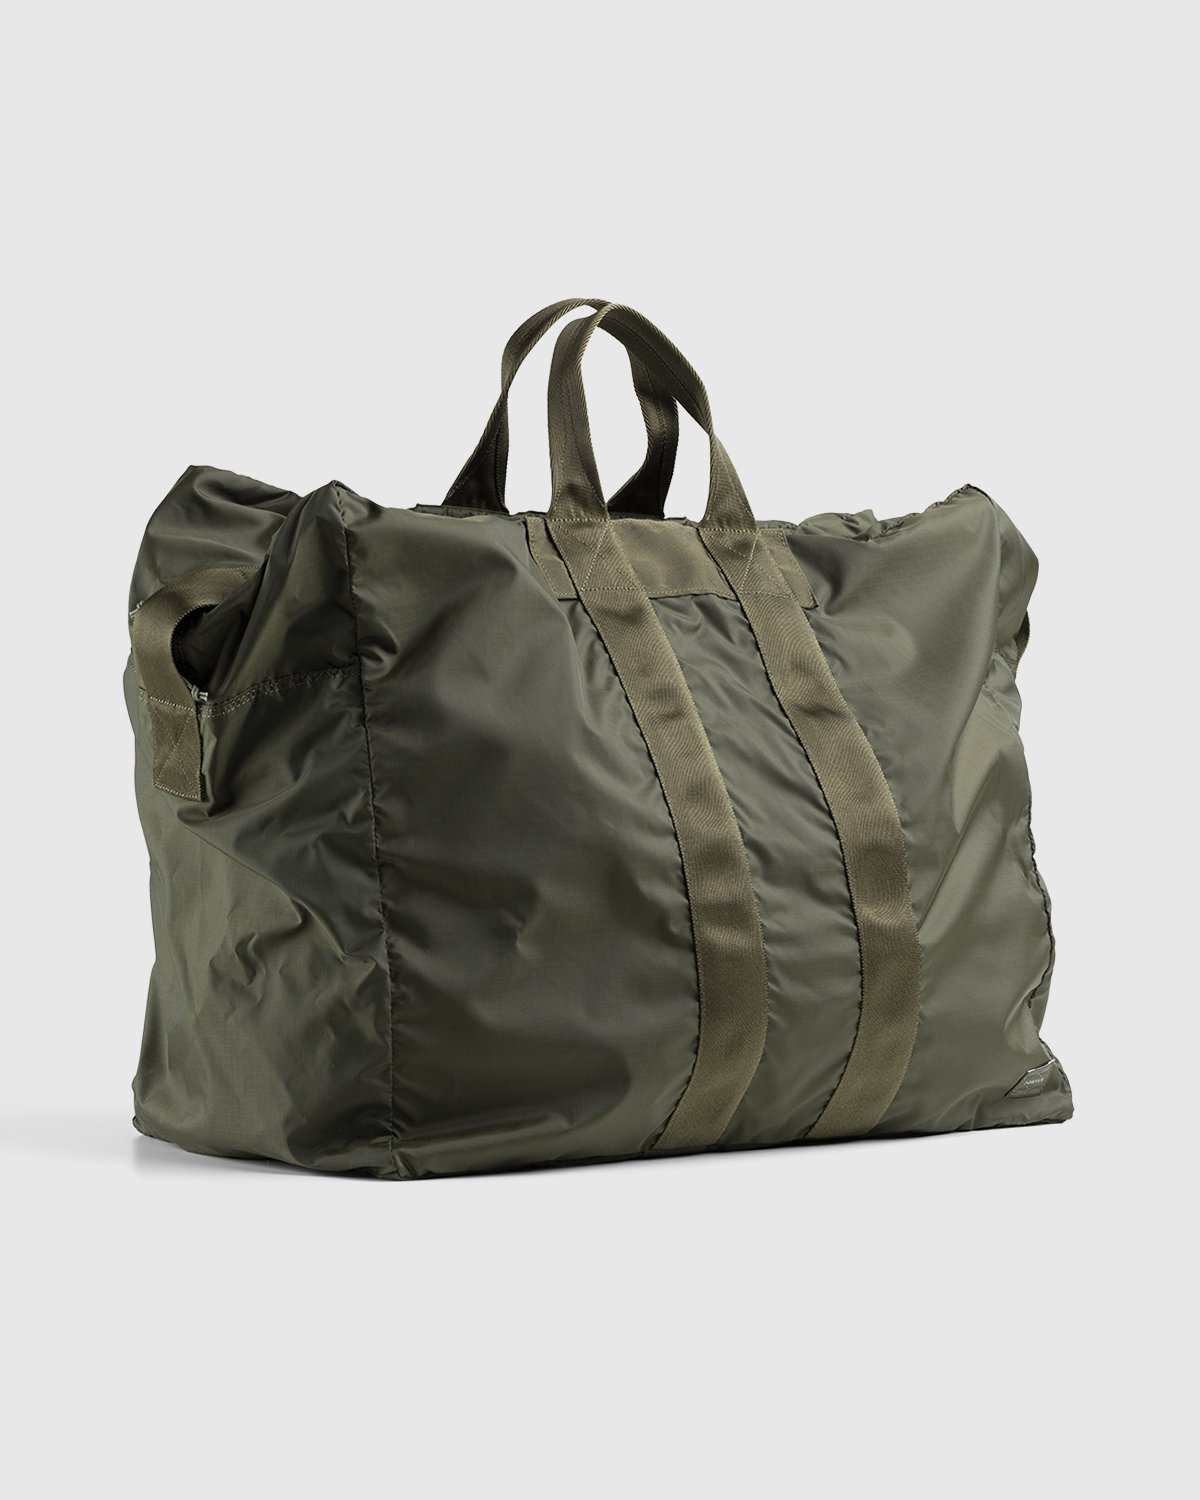 Porter-Yoshida & Co. - Flex 2-Way Duffle Bag Olive Drab - Accessories - Green - Image 3